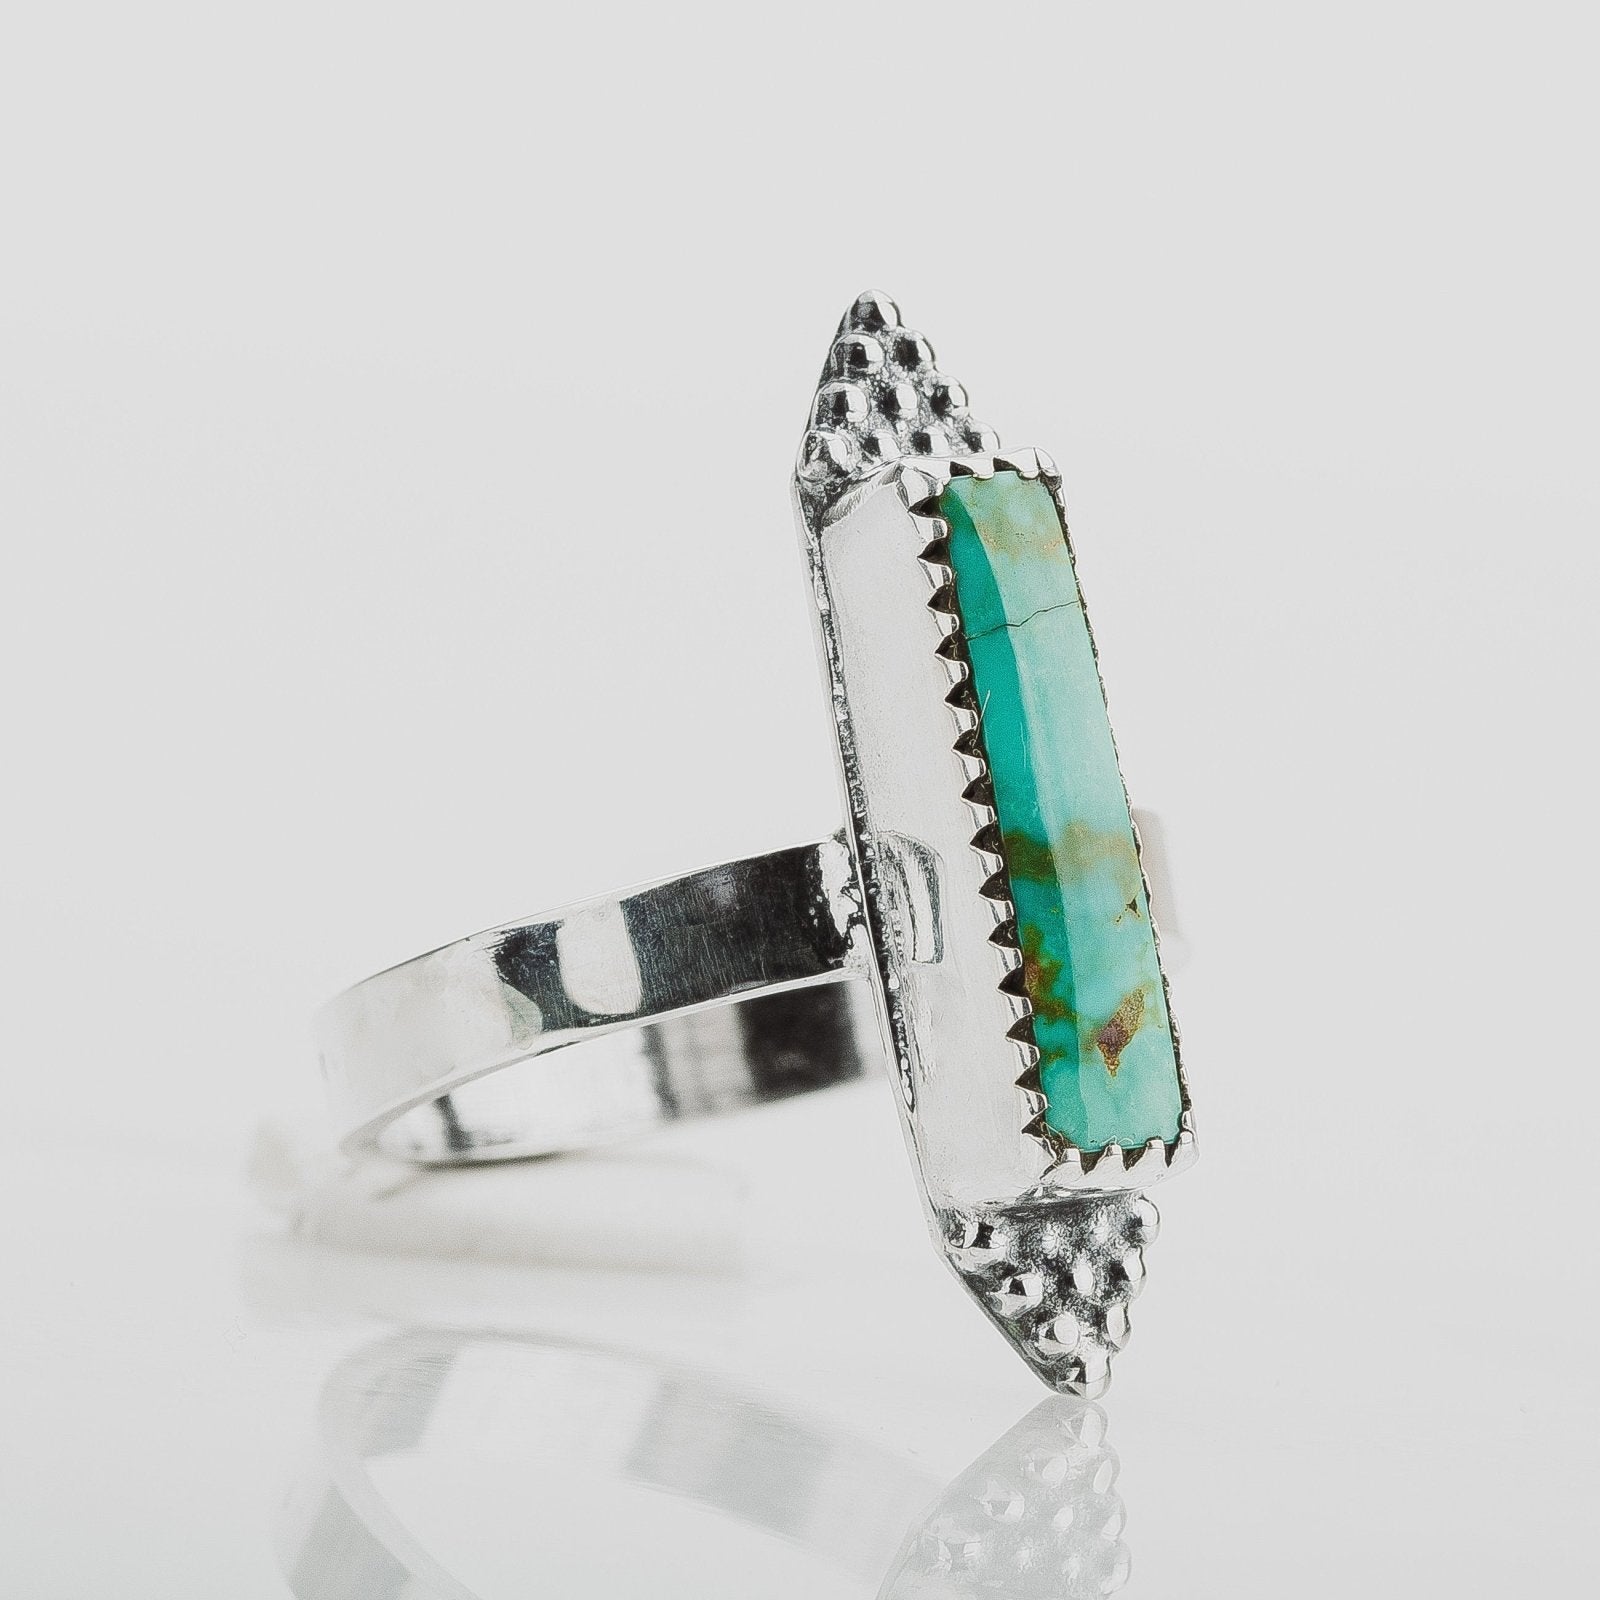 Size 6.75 Rectangle Royston Turquoise Gemstone Ring - Melanie Golden Jewelry - gemstone rings, rings